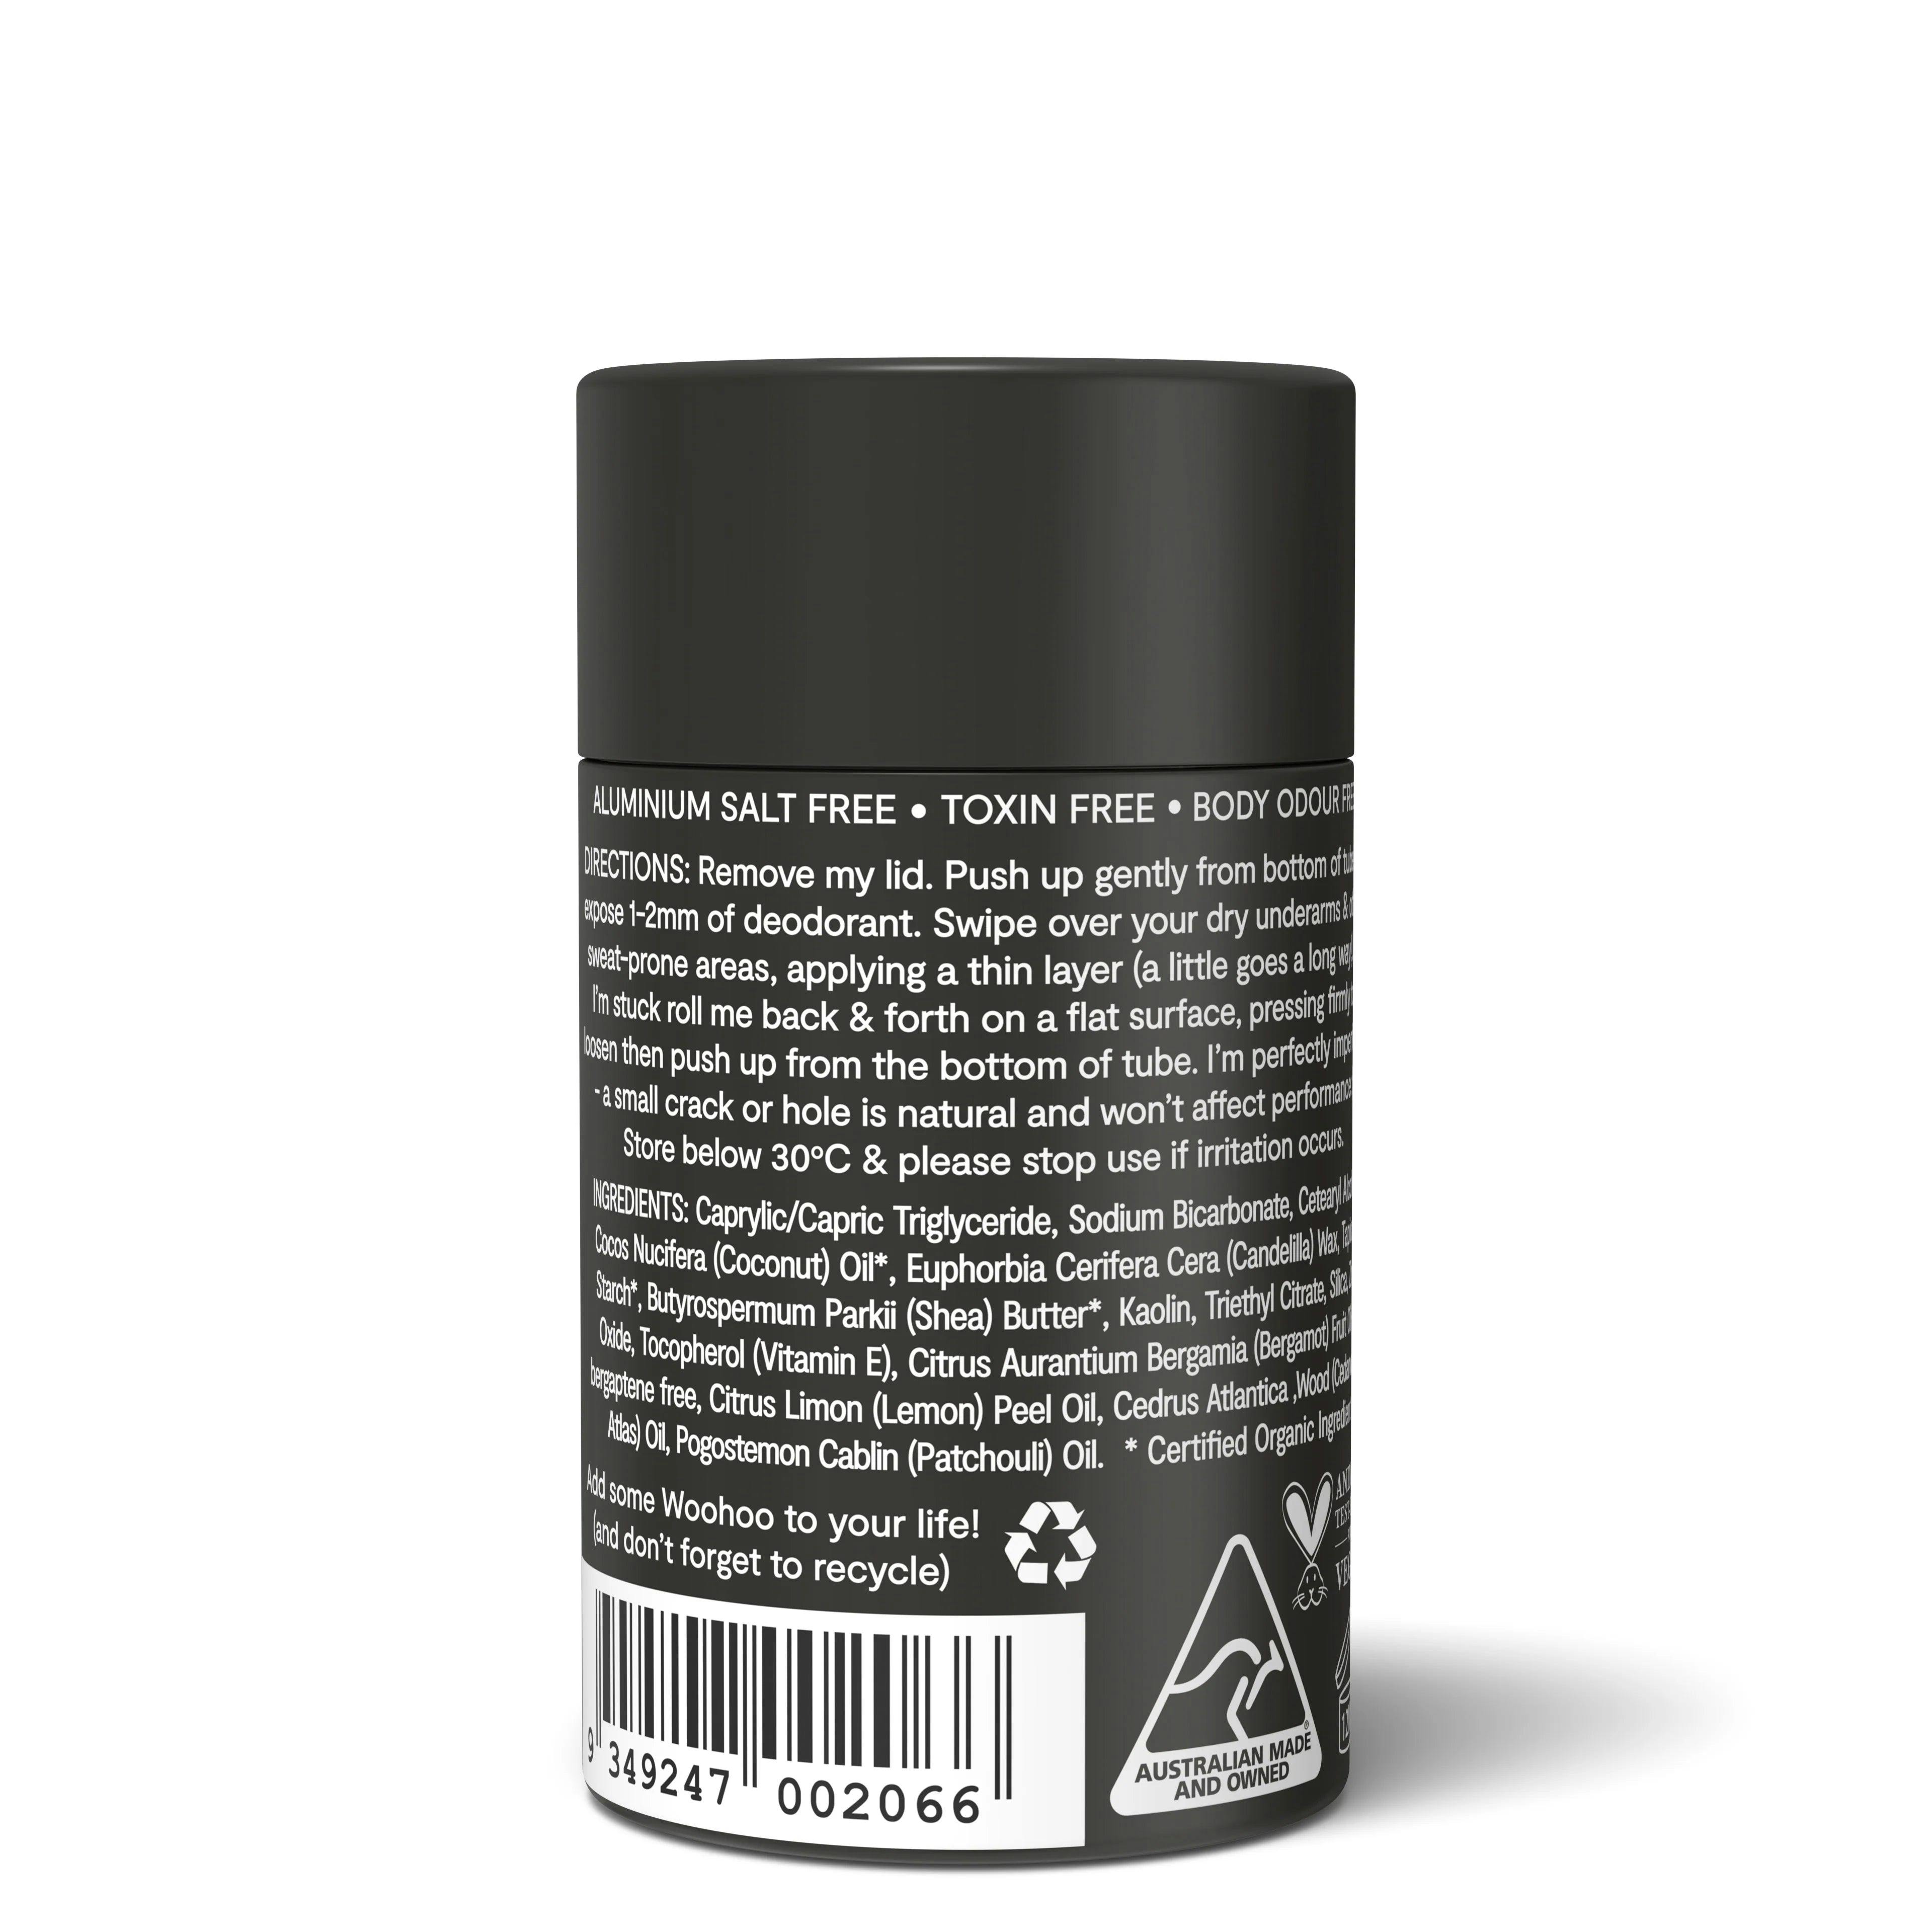 WOOHOO Deodorant & Anti-Chafe Stick Tux (Extra Strength) 60g